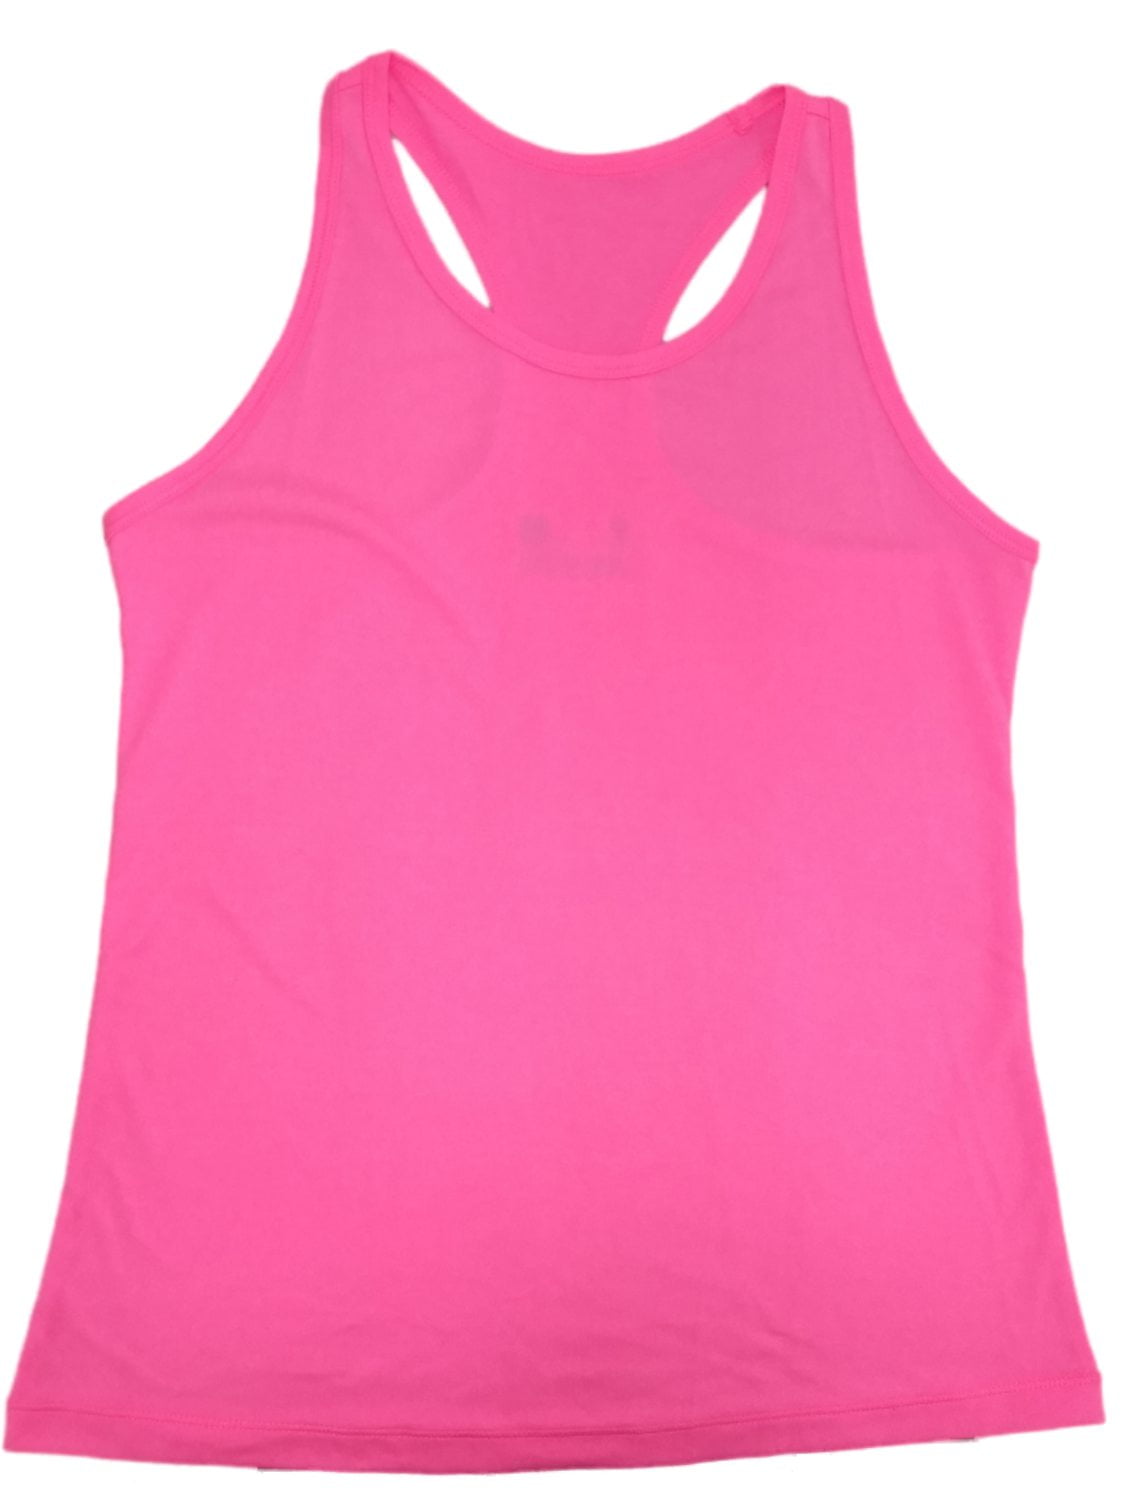 Girls Hot Pink Athletic Tank Top Racerback Tee Shirt X-Large (16 ...